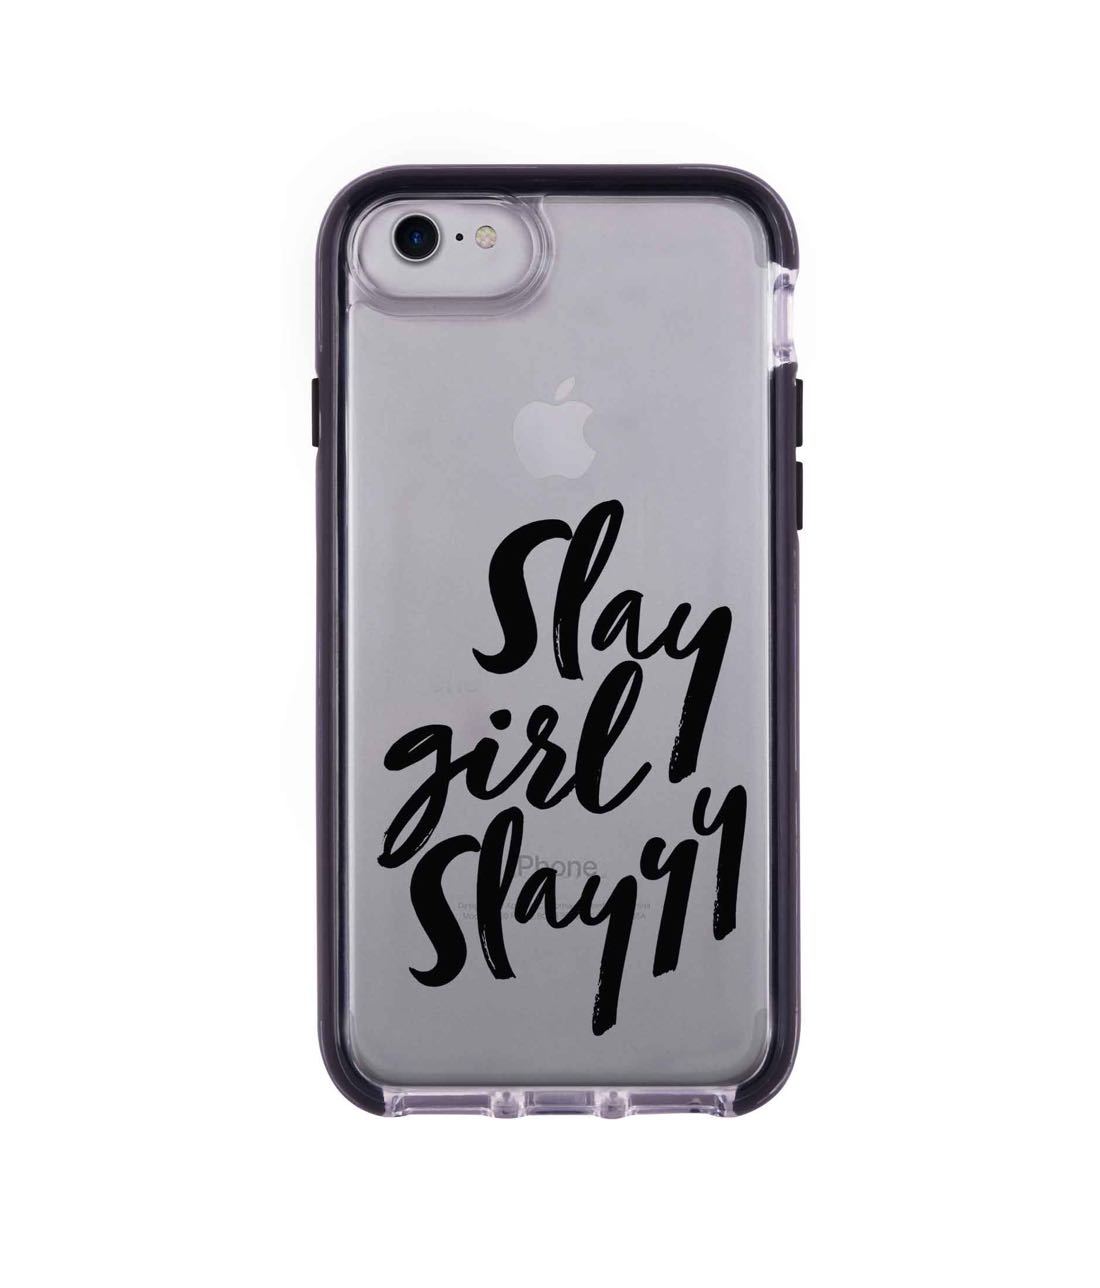 Slay girl Slay - Extreme Phone Case for iPhone 7